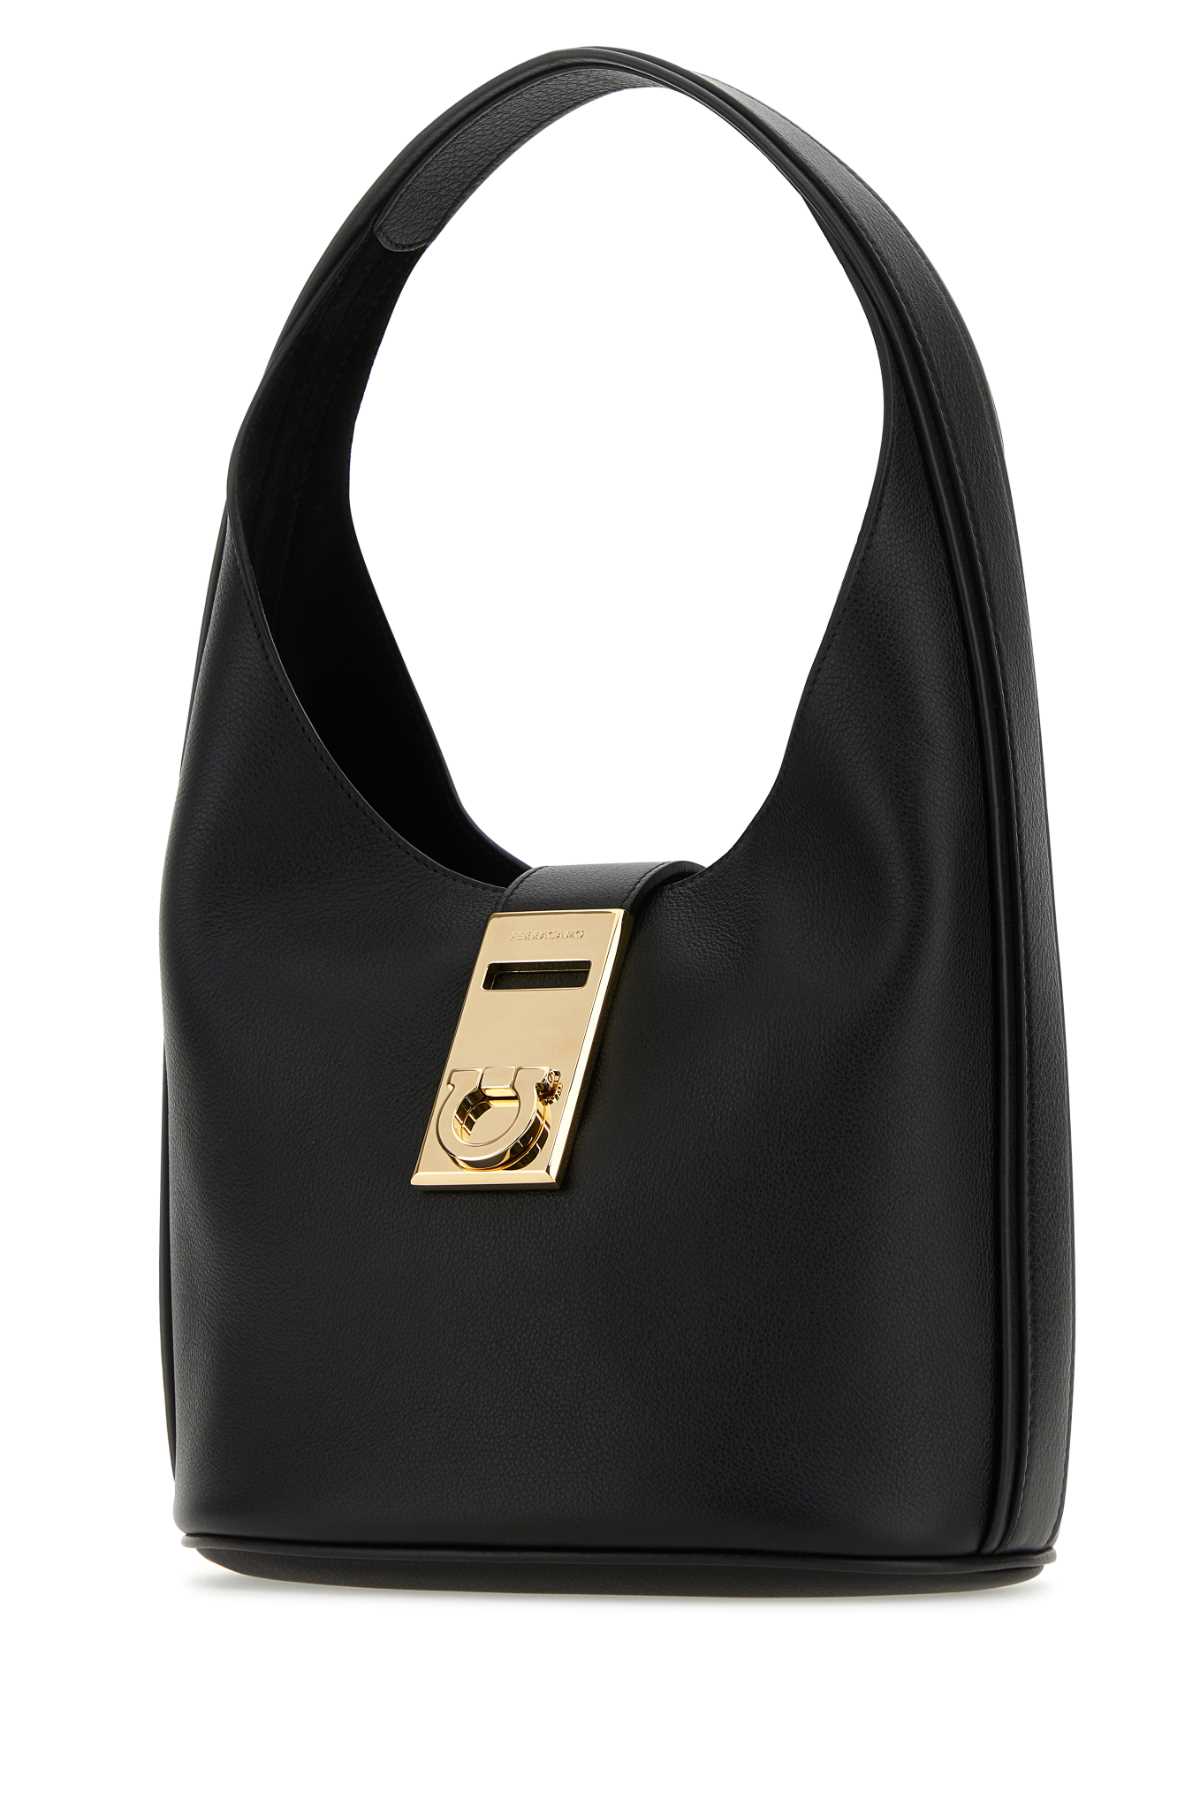 Ferragamo Black Leather Medium Hobo Handbag In Nero